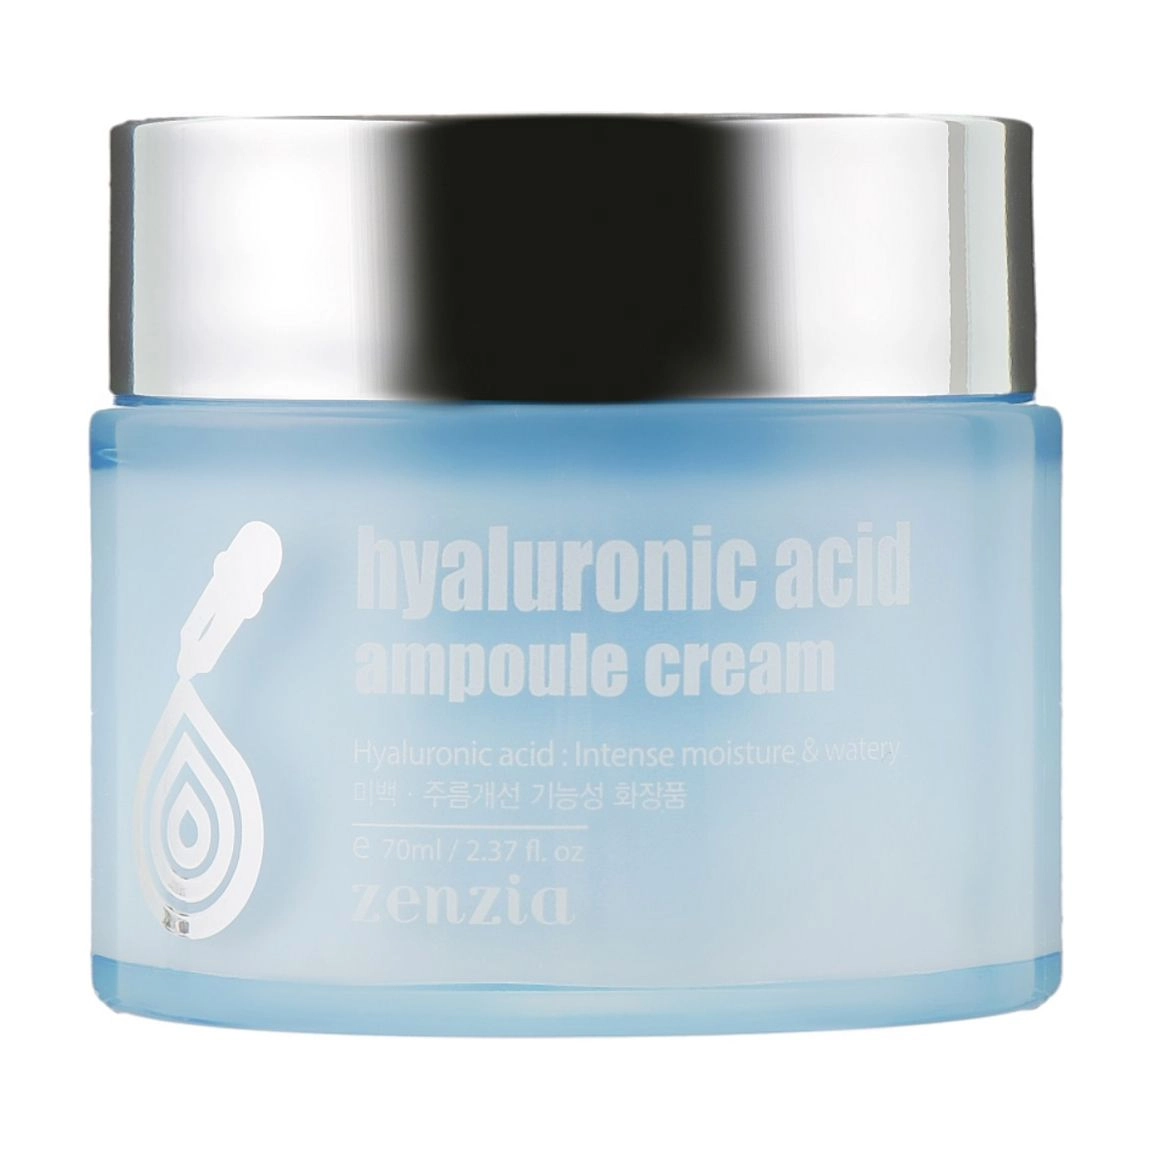 Крем для лица с гиалуроновой кислотой - Zenzia Hyaluronic Acid Ampoule Cream, 70 мл - фото N3